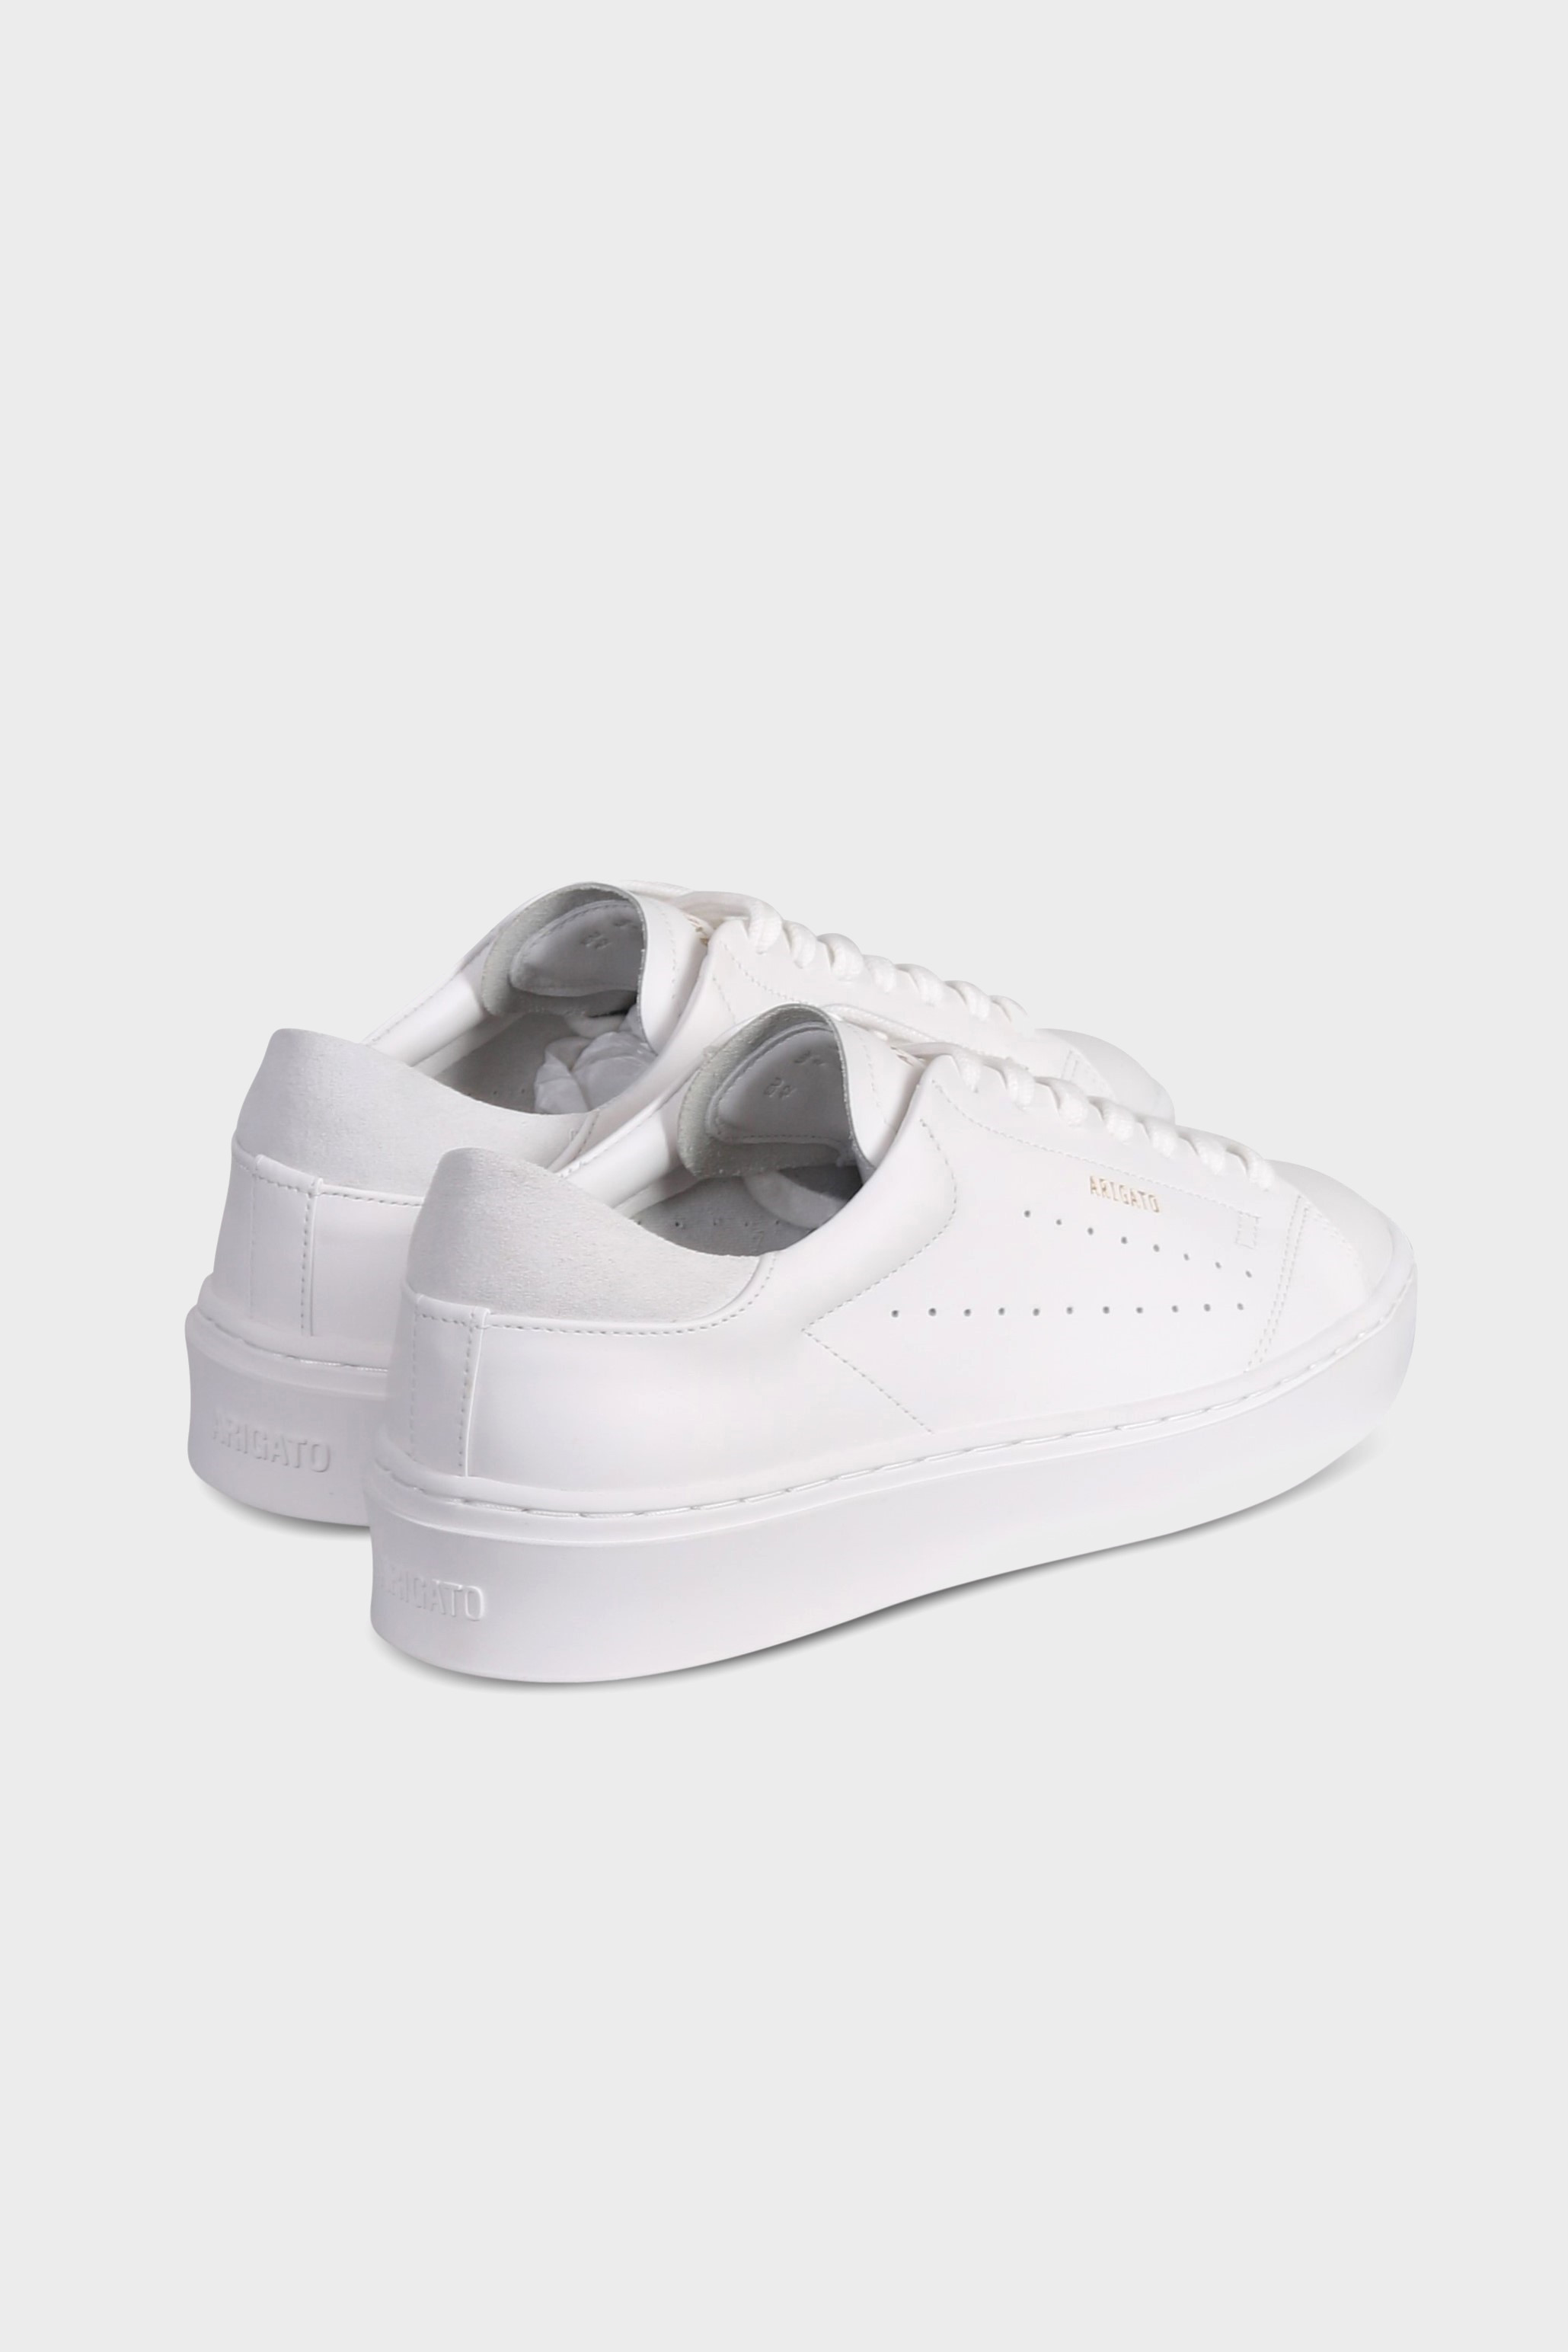 AXEL ARIGATO Court Sneaker in White/Light Grey 45